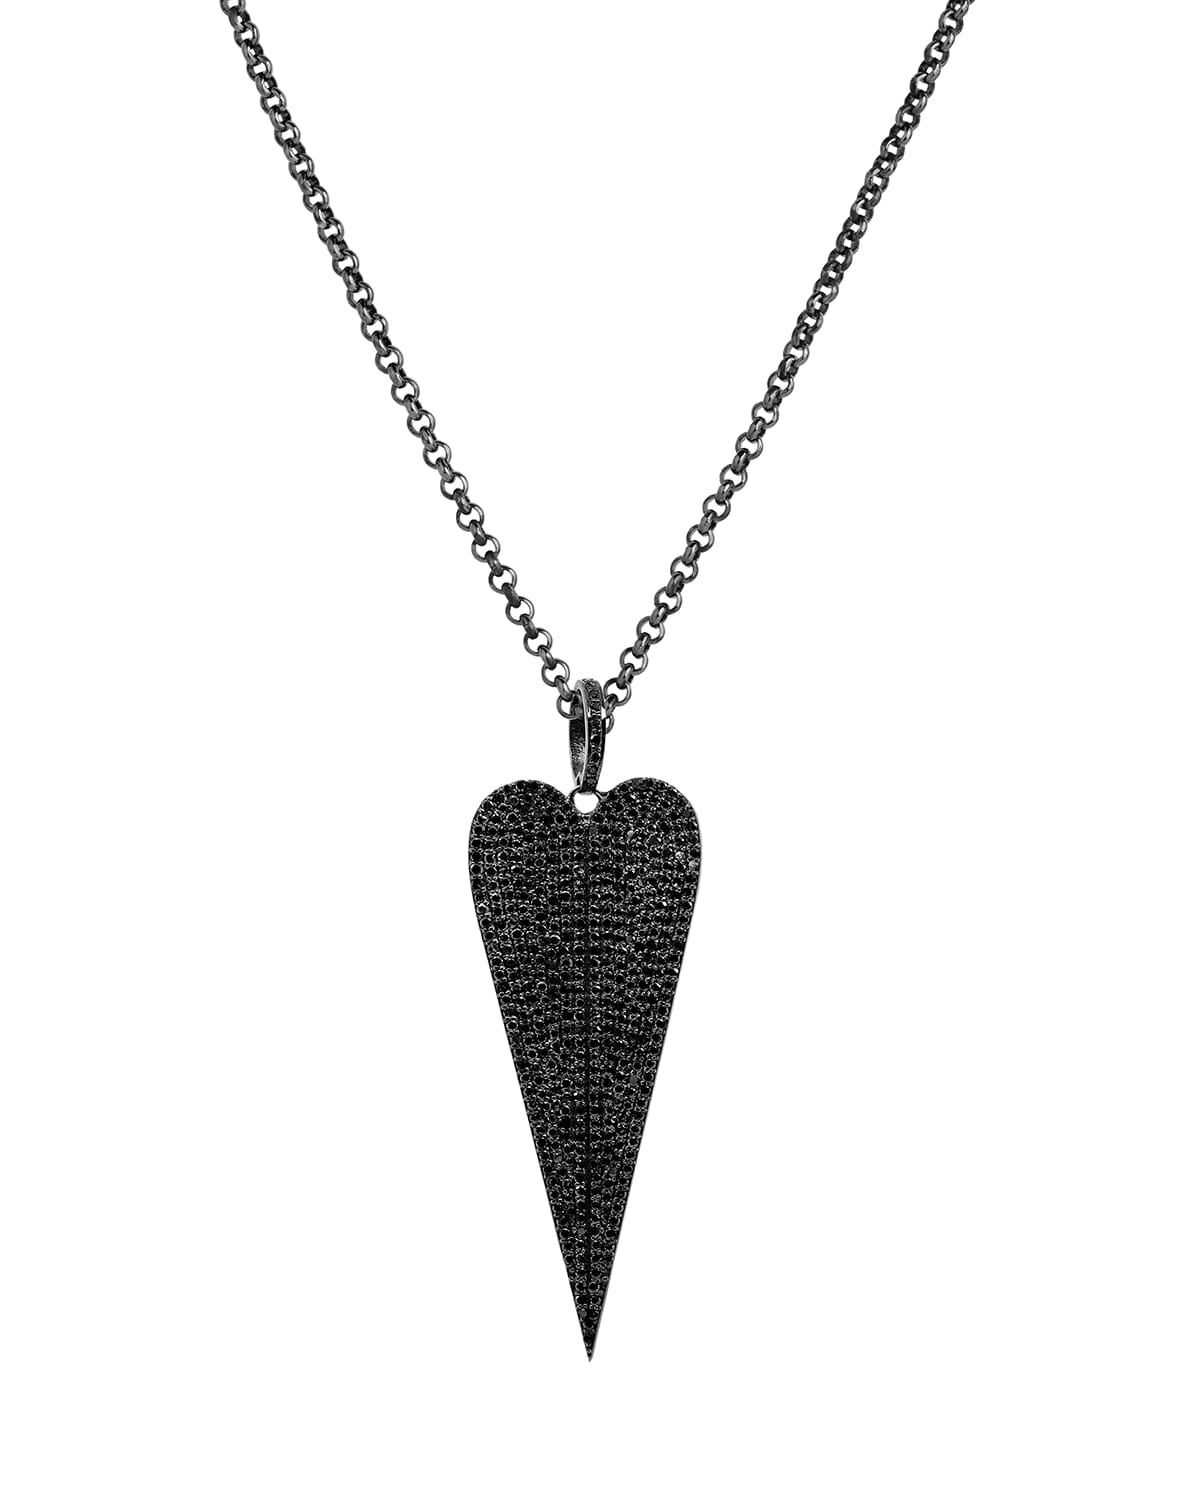 Bridget King Jewelry Large Black Diamond Heart Necklace